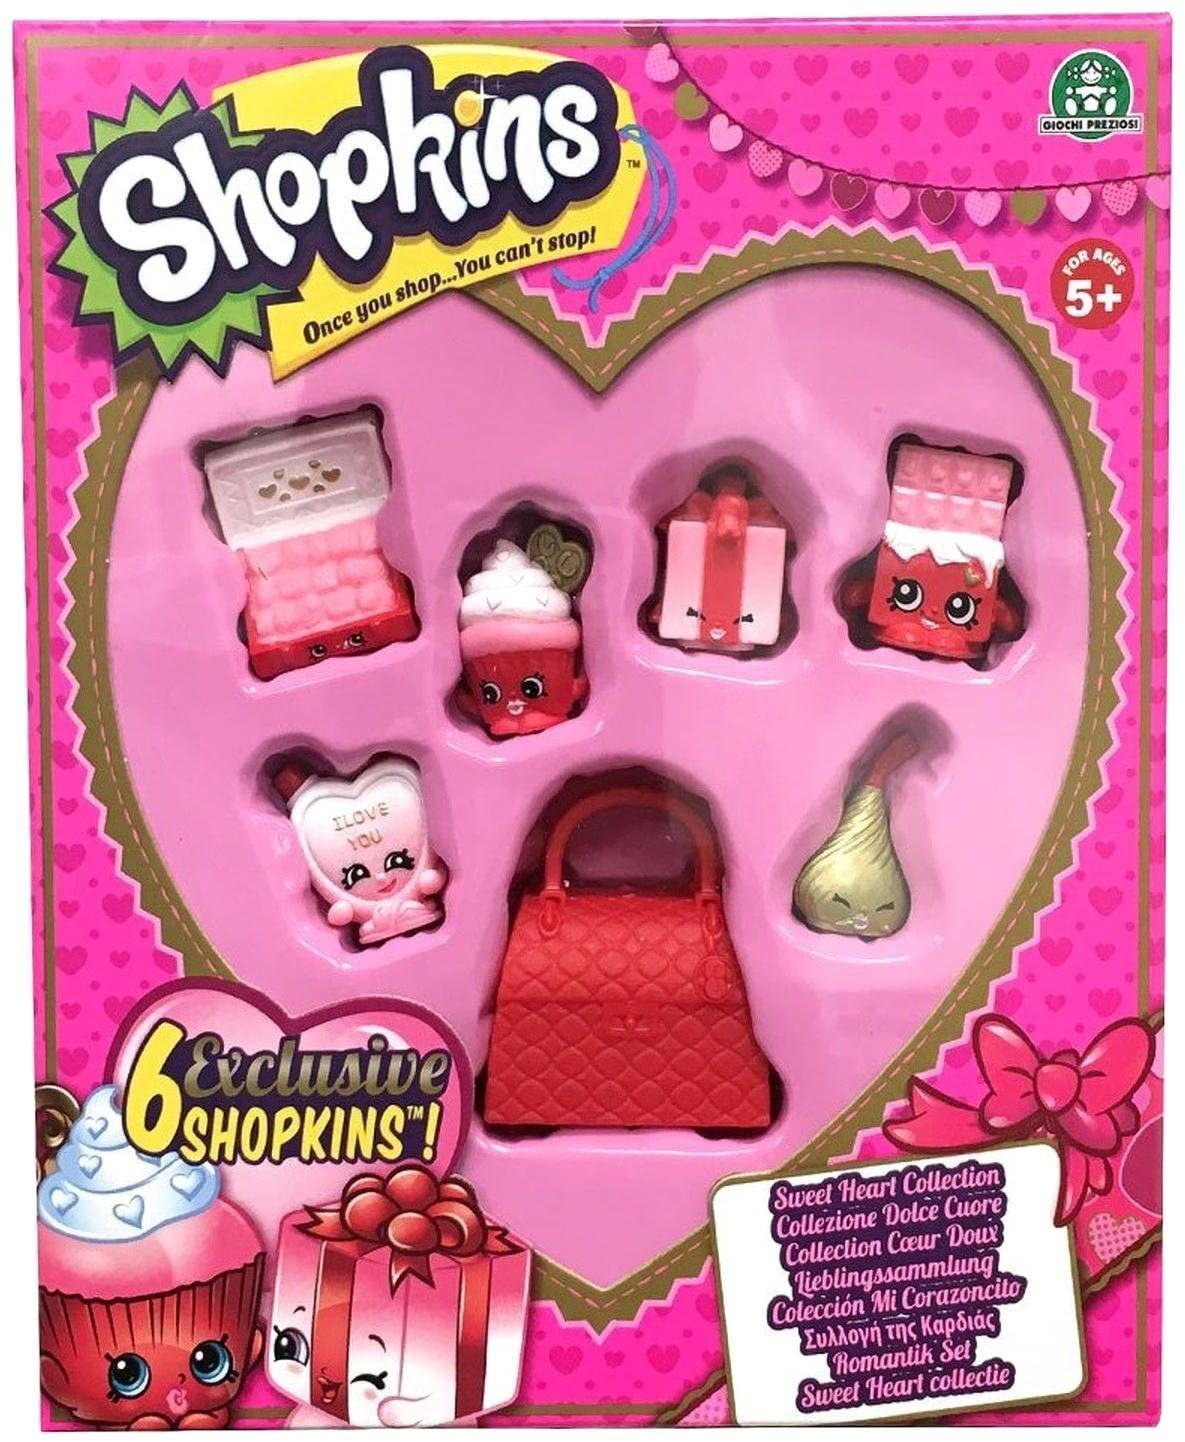 Shopkins Valentine's Day gift idea for girls | The Dating Divas